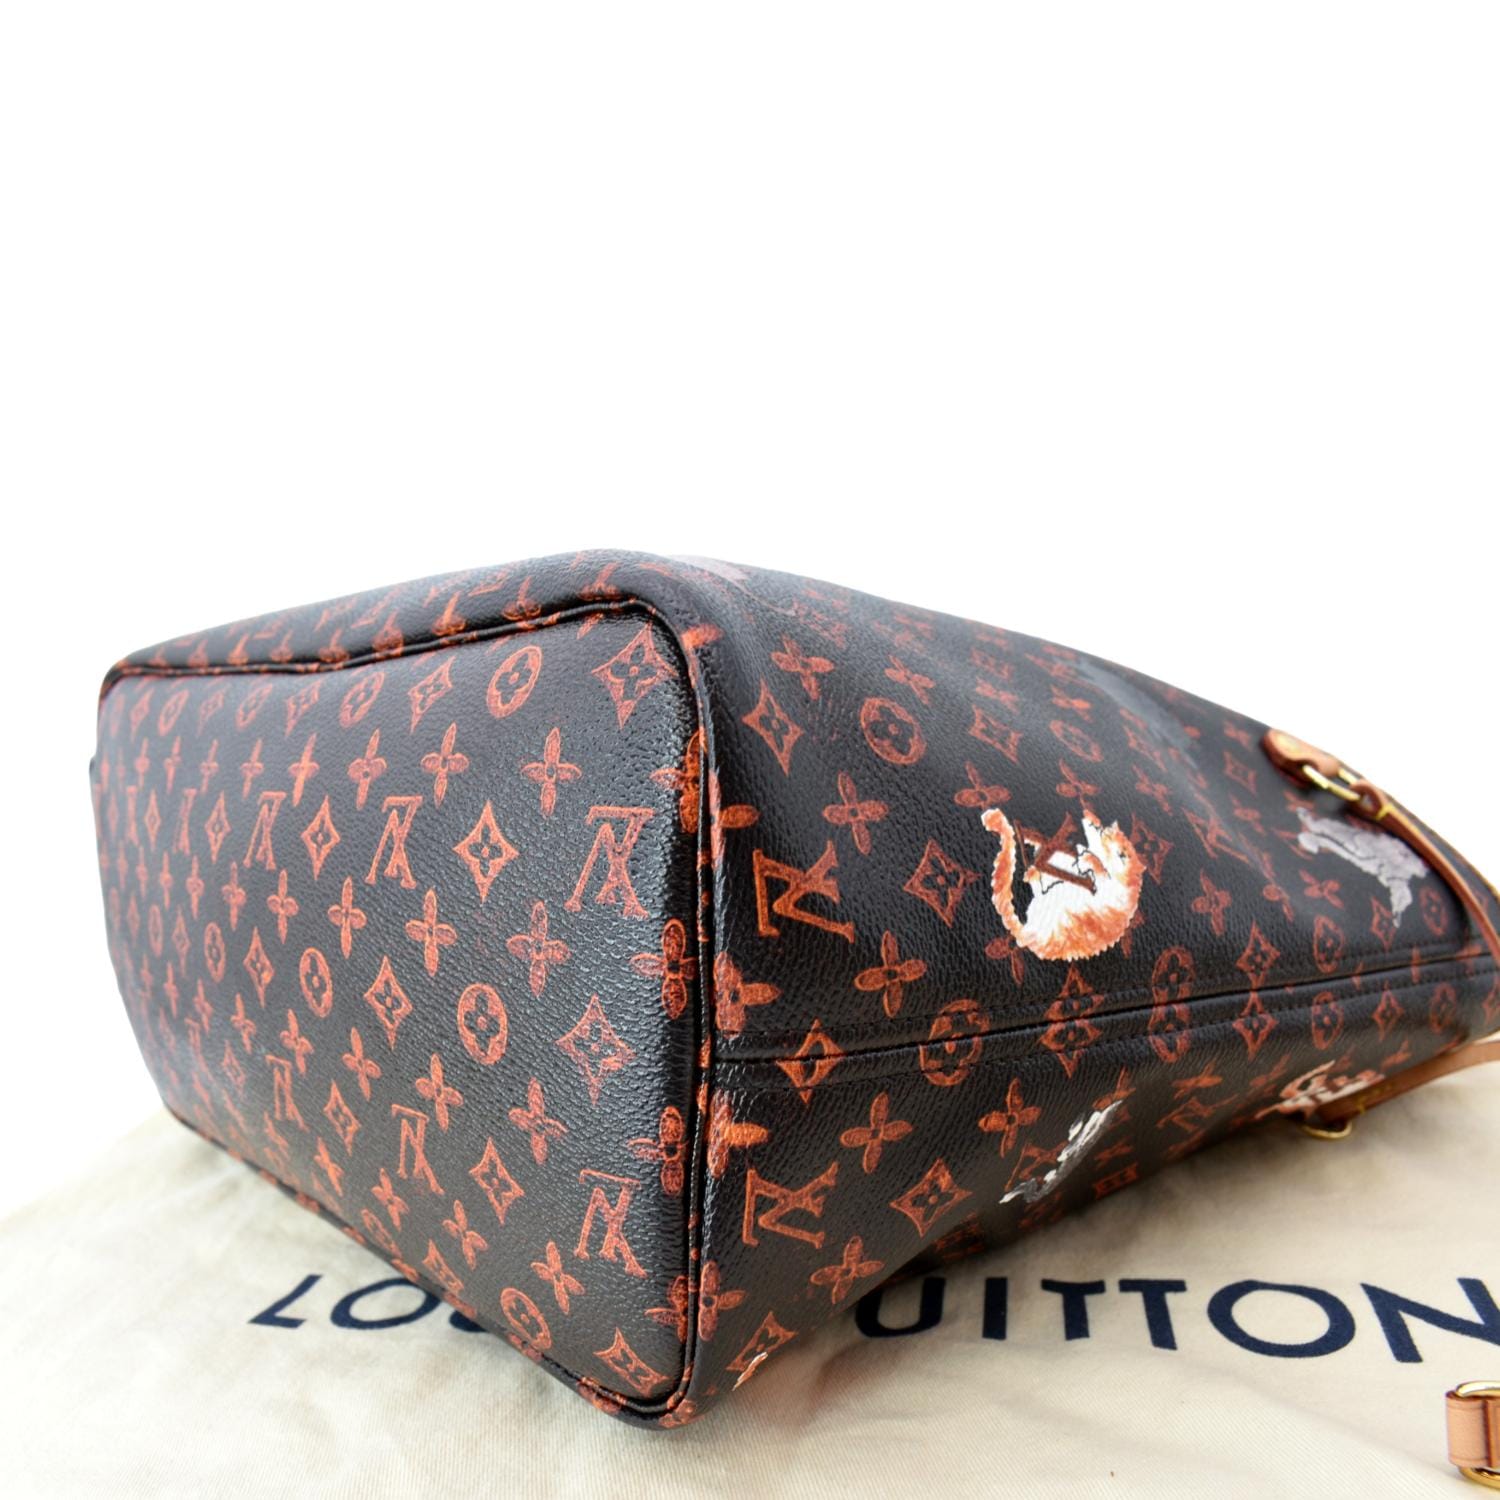 Louis Vuitton Cat Bags & Handbags for Women, Authenticity Guaranteed